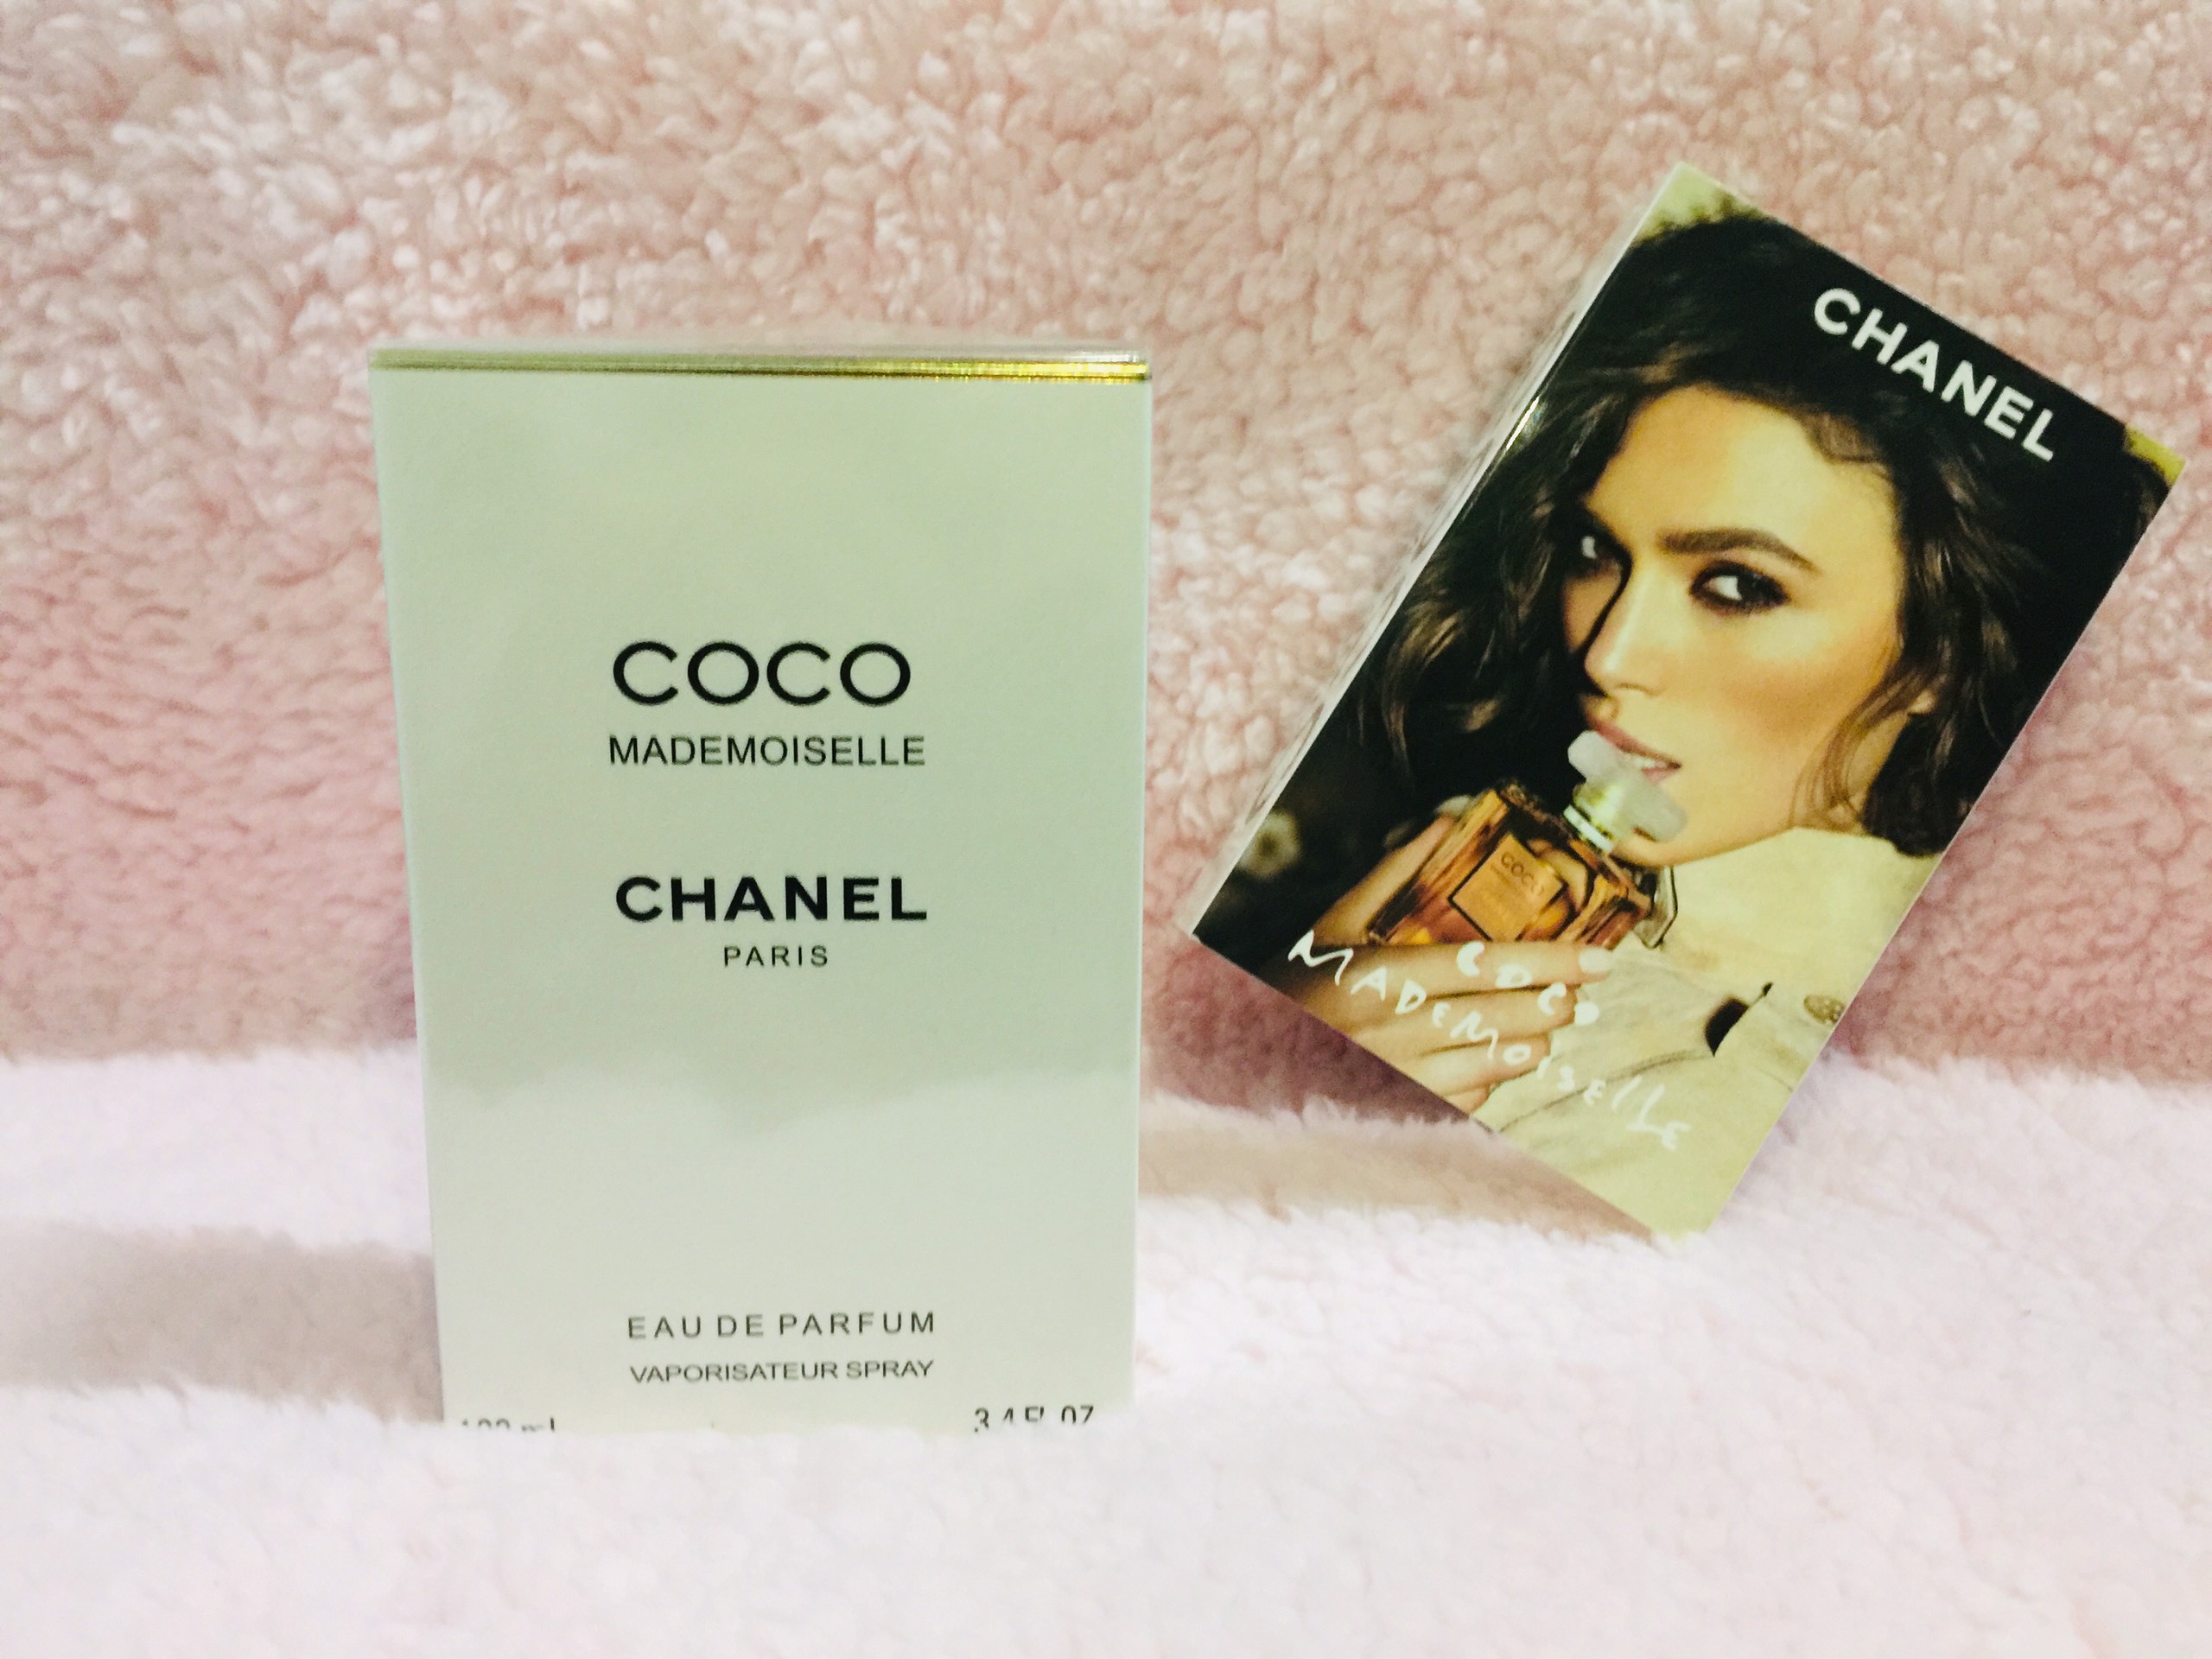 Chanel COCO Mademoiselle EDP 100ml Perfume with Gift Box